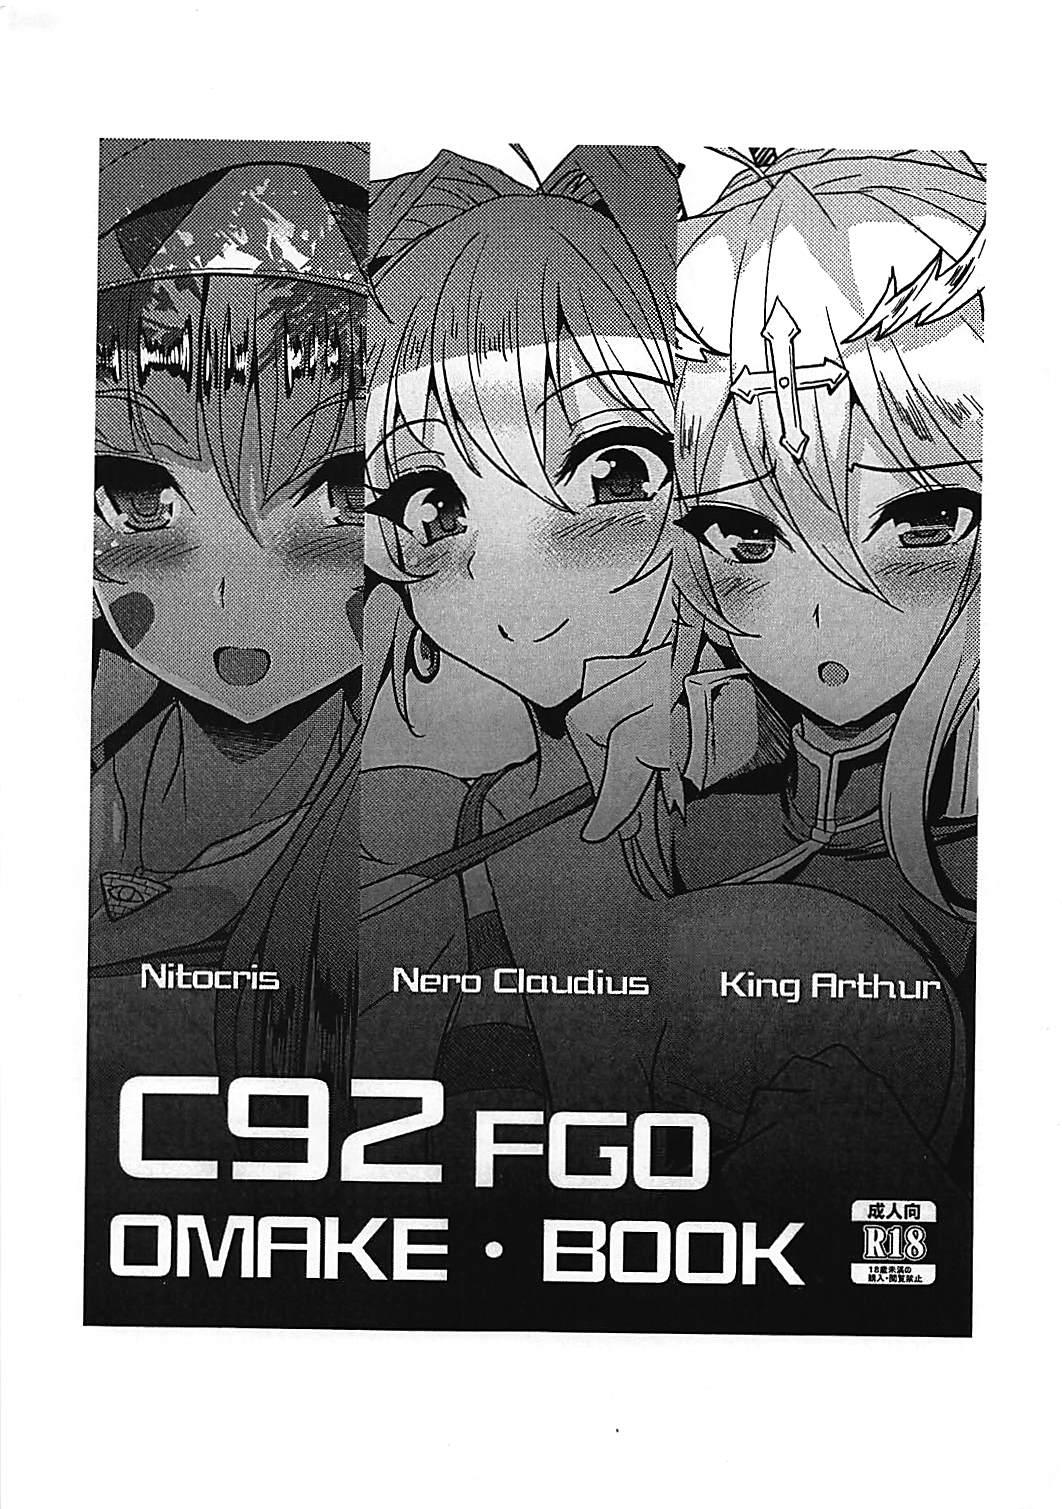 C92 FGO OMAKE BOOKS 0